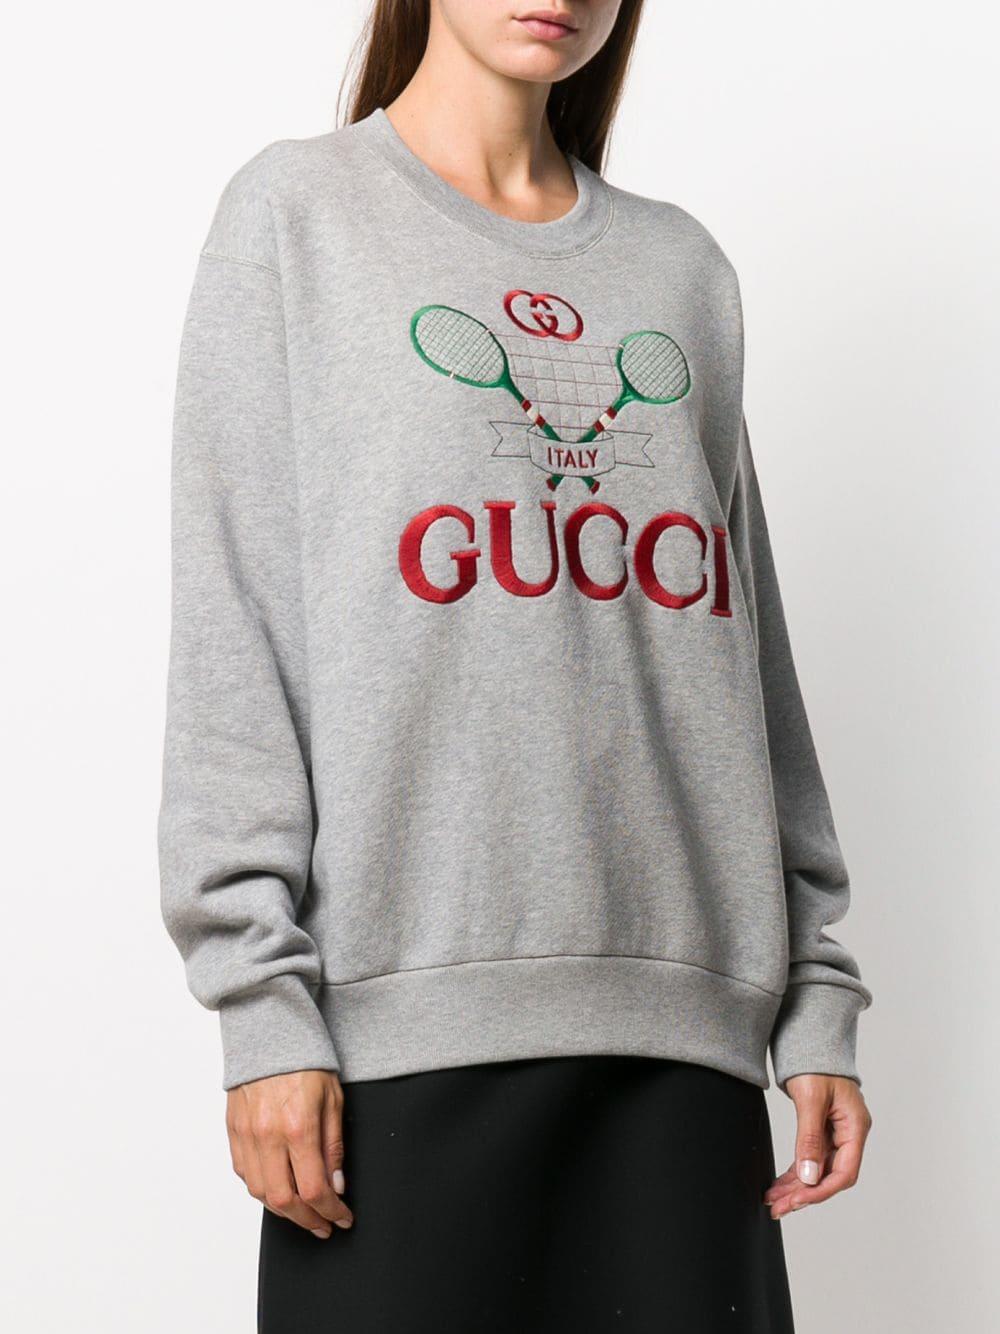 Gucci Tennis Motif Embroidered Sweatshirt in Grey (Grey) - Lyst